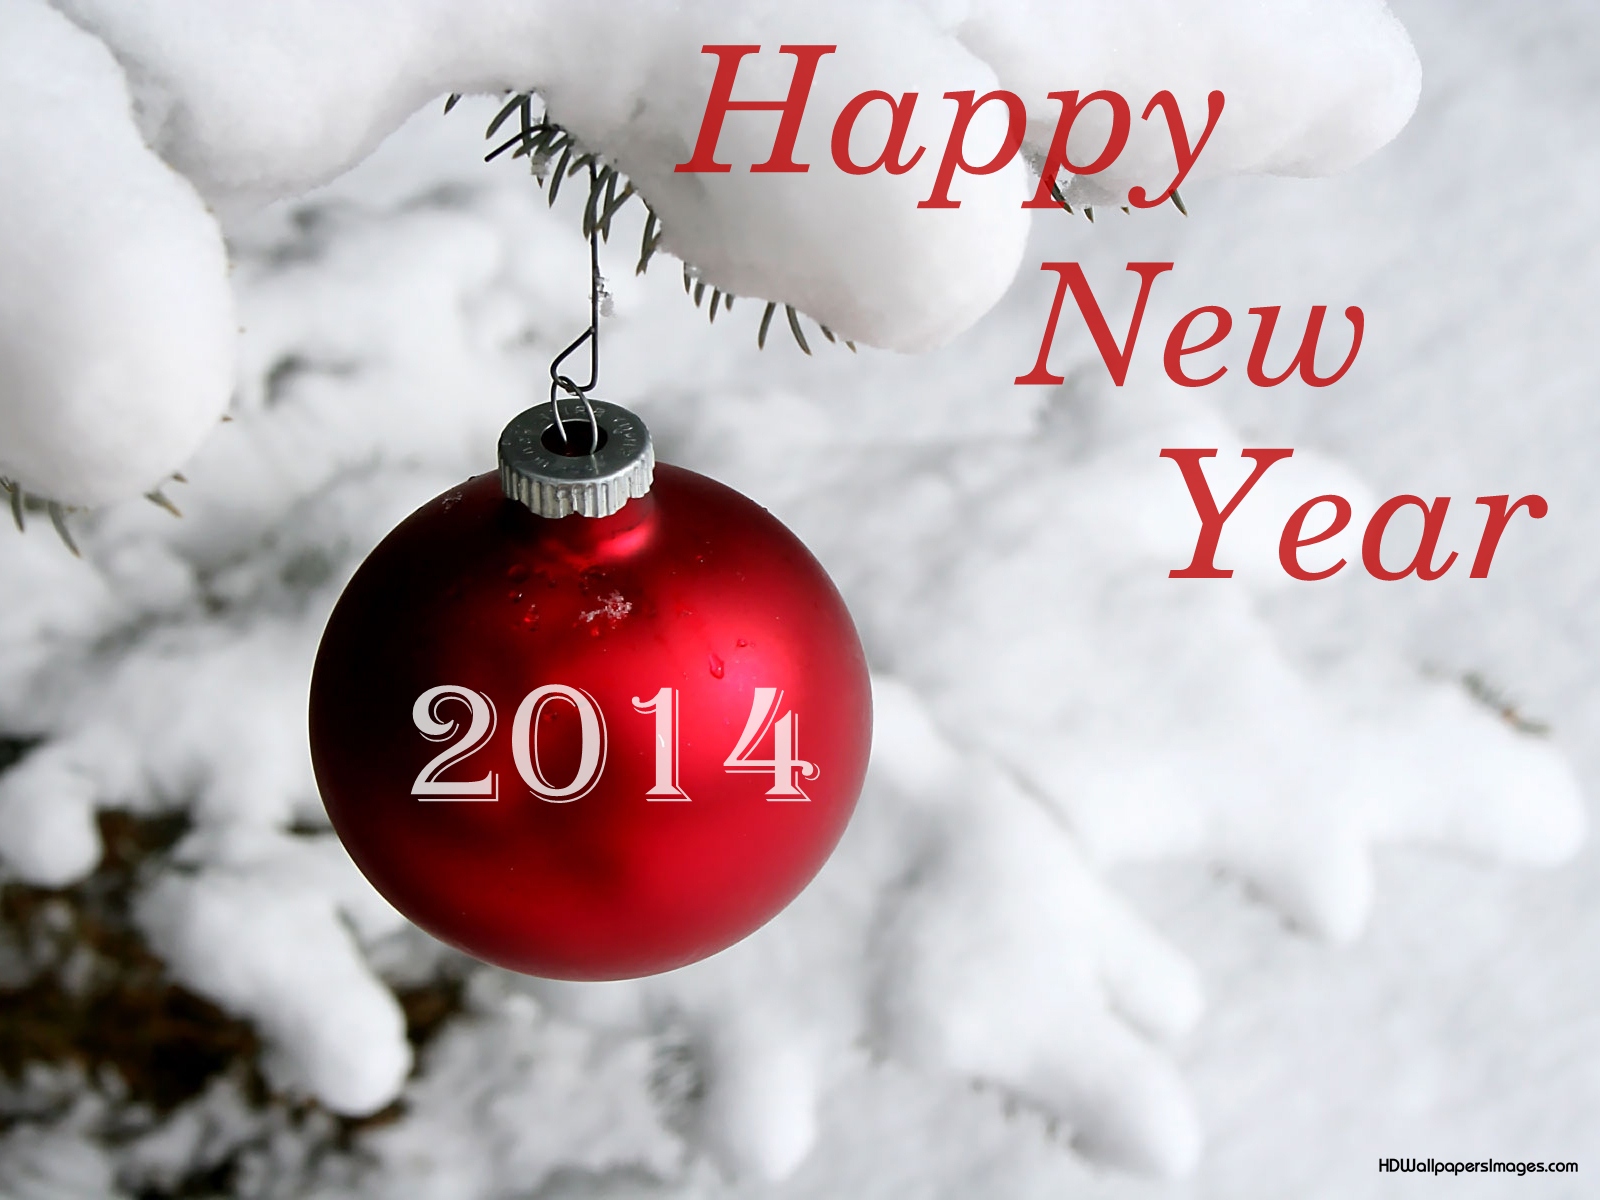 Happy New Year's 2014